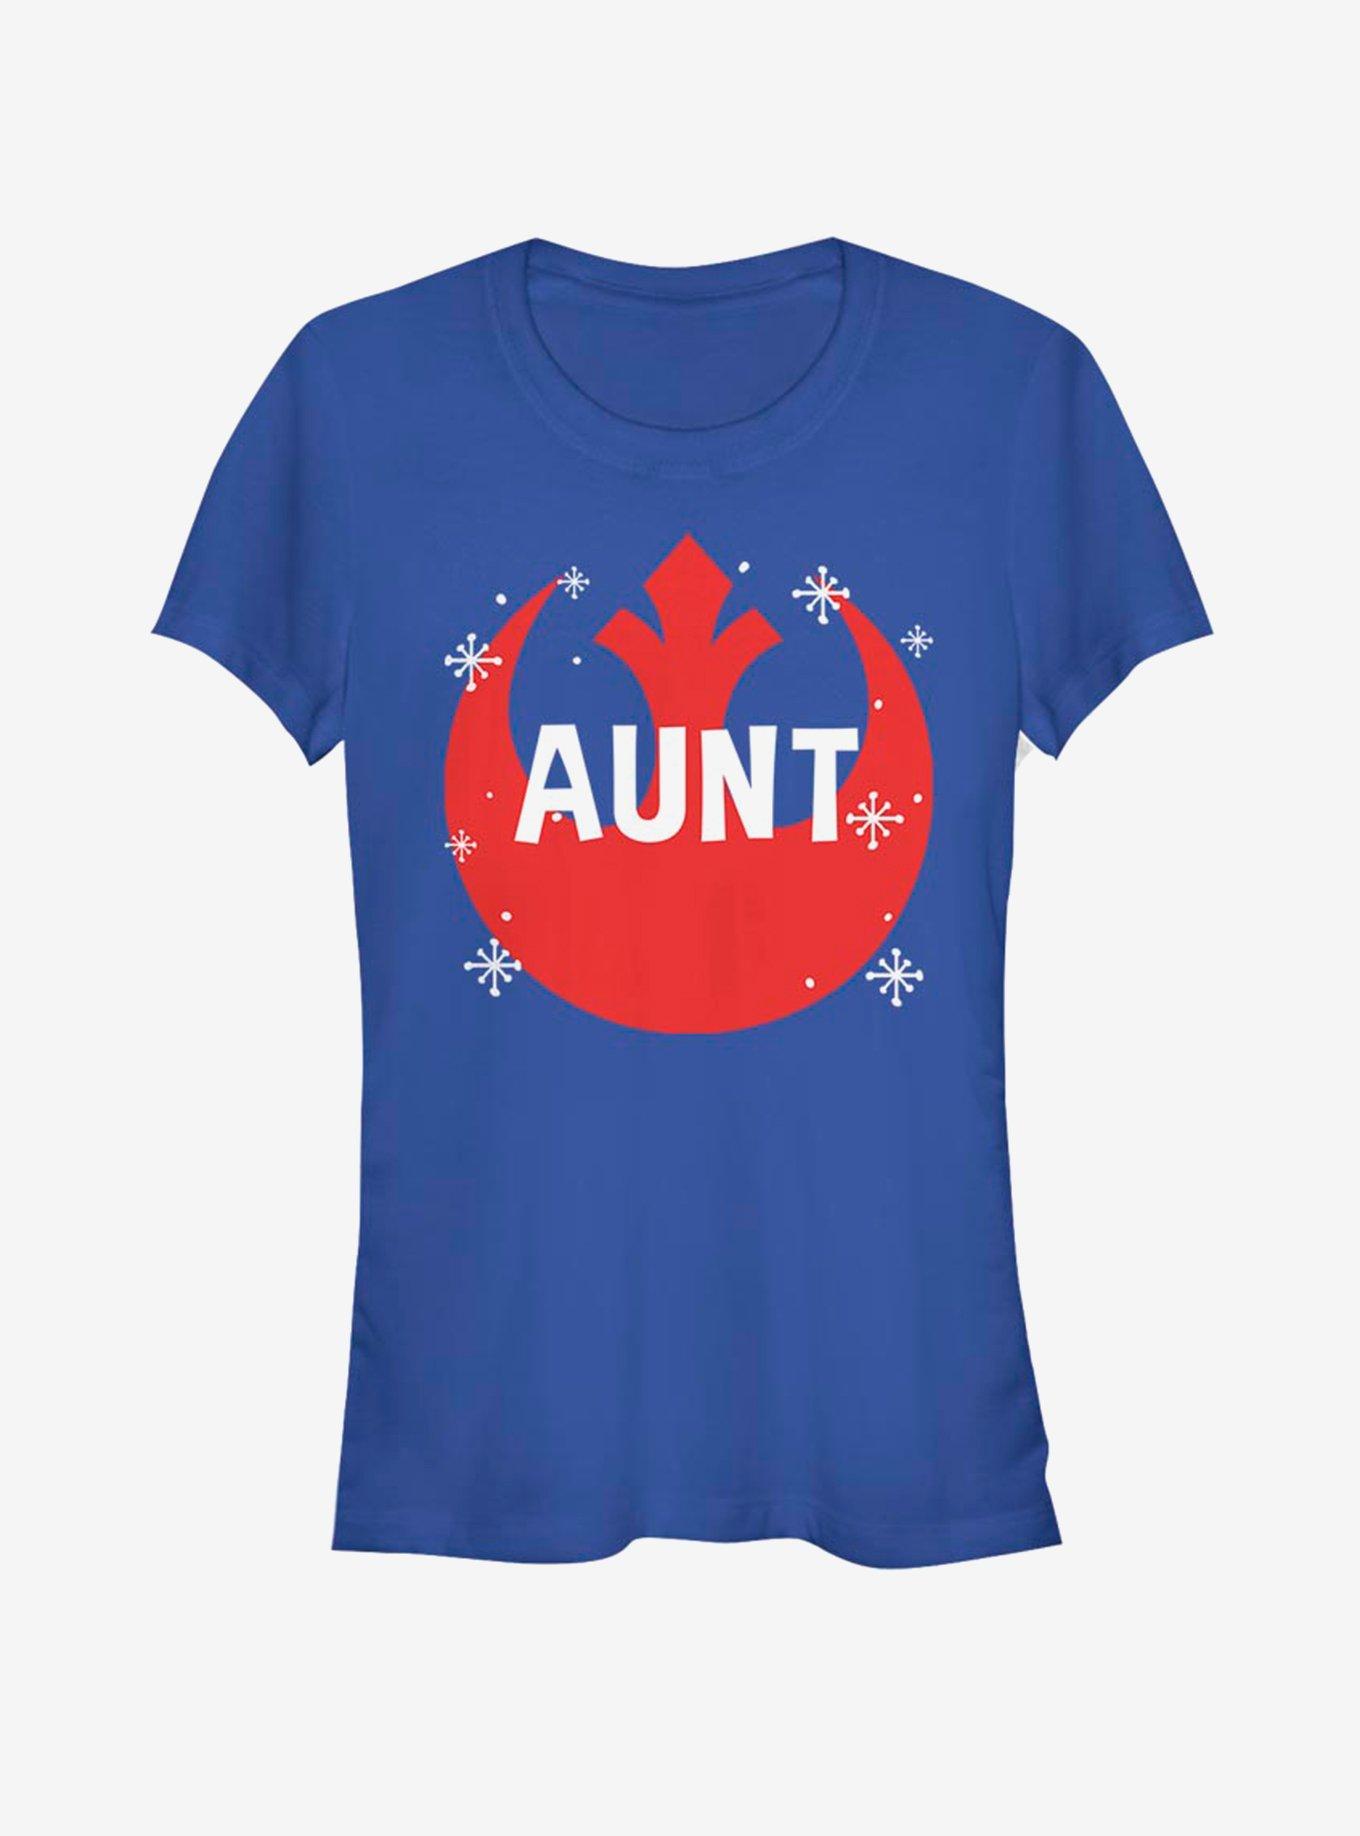 Star Wars Overlay Aunt Girls T-Shirt, , hi-res